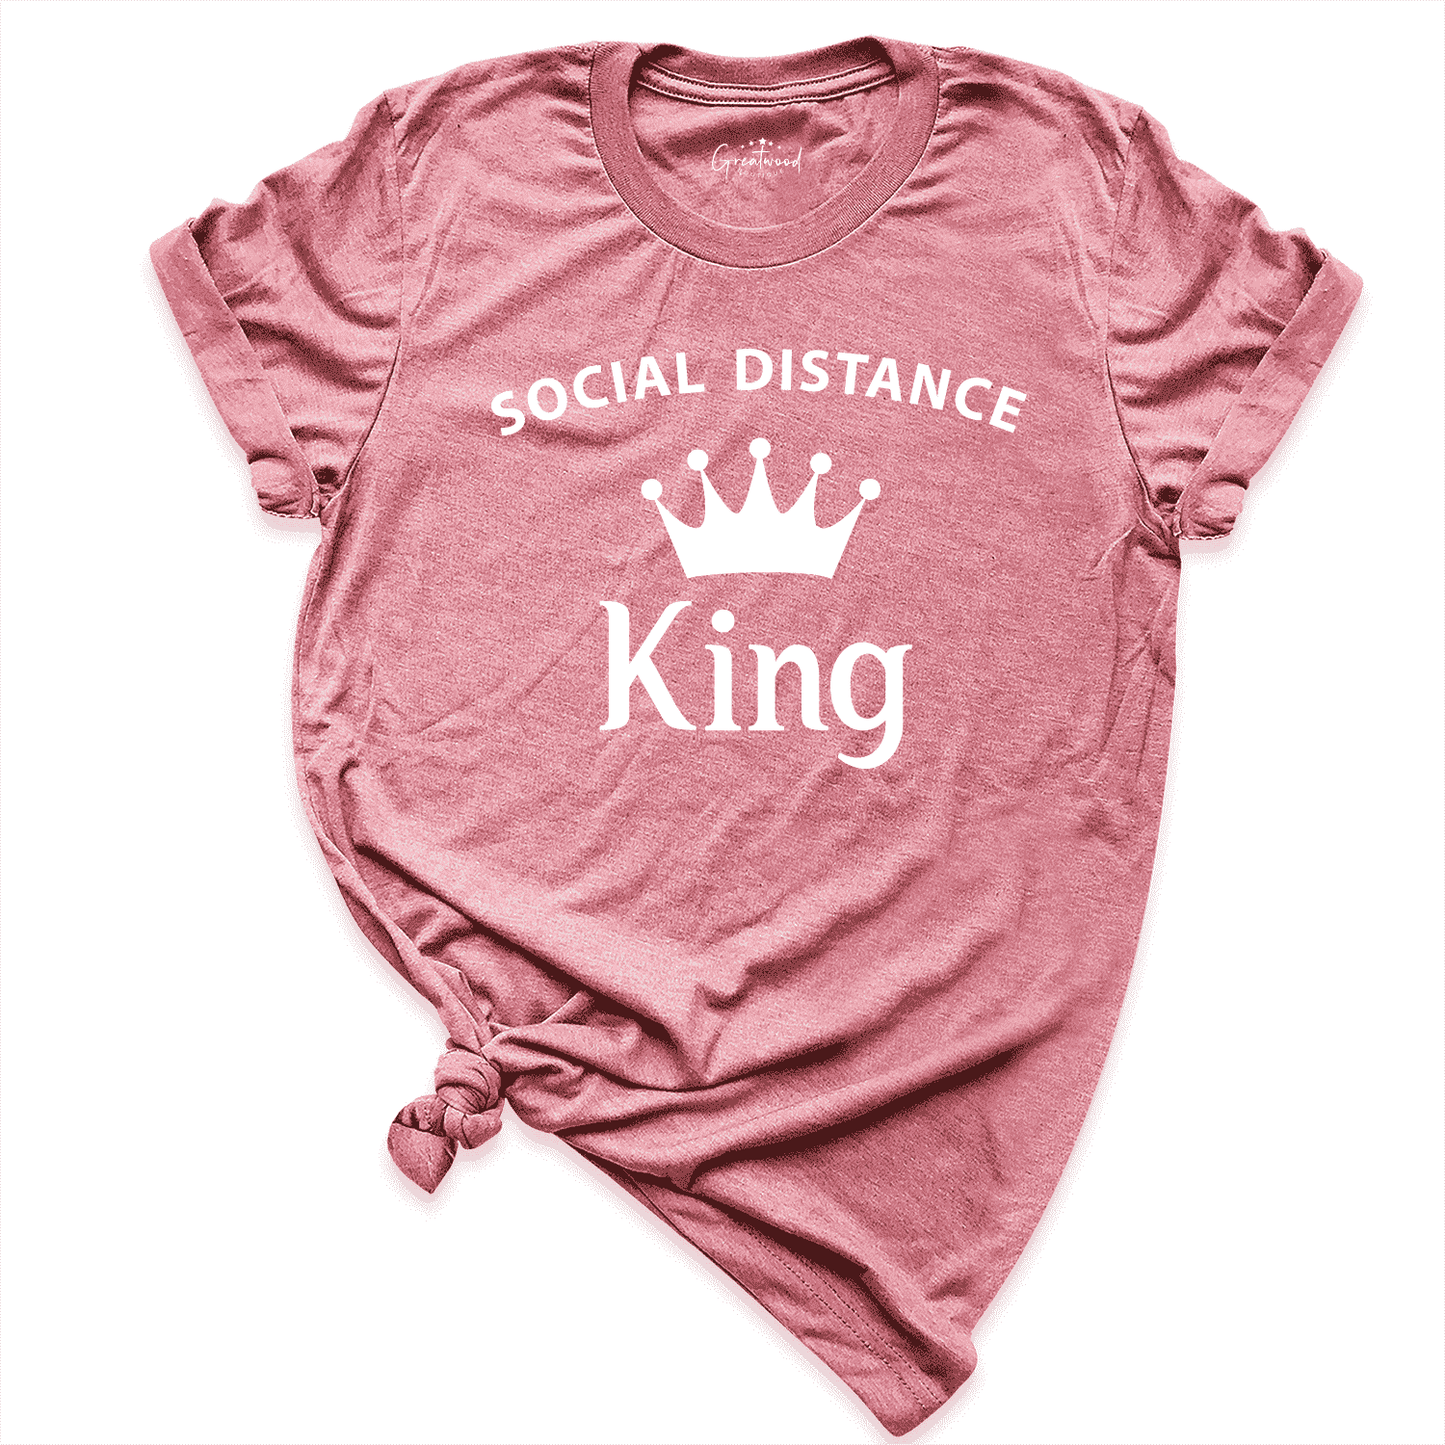 Social Distancing King Shirt